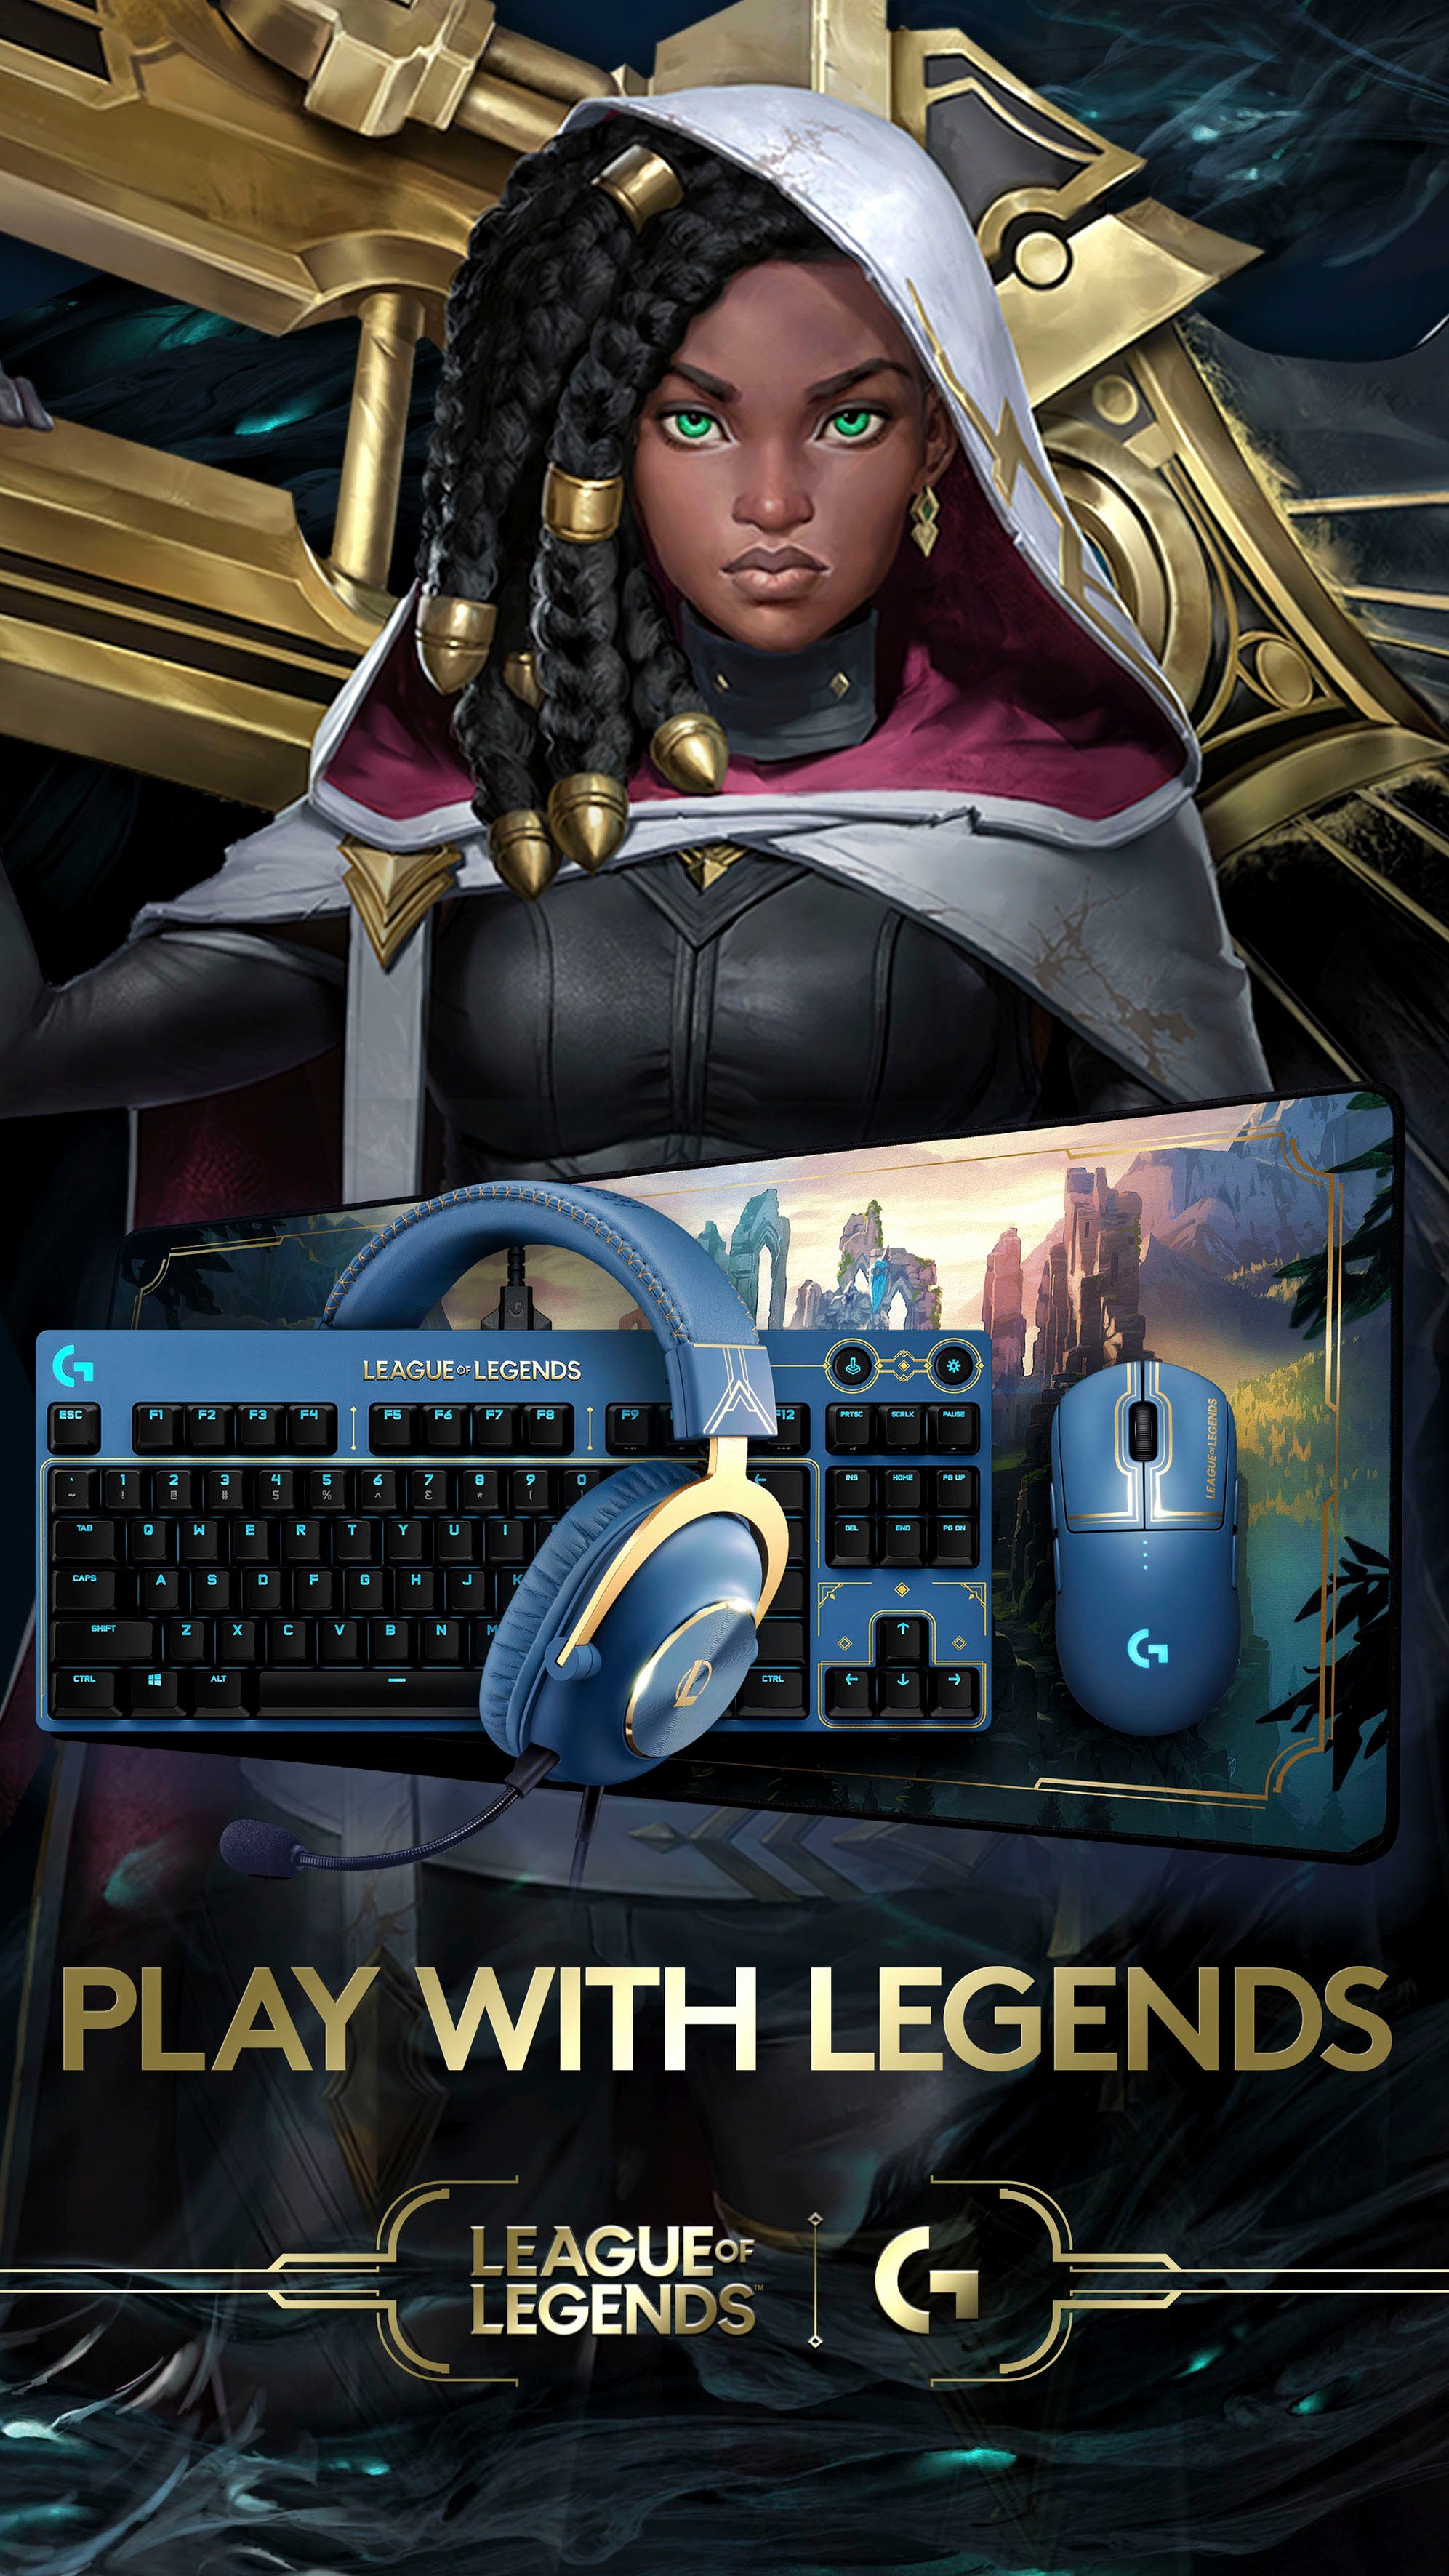 League G PRO Legends Gaming-Tastatur of Edition G Logitech